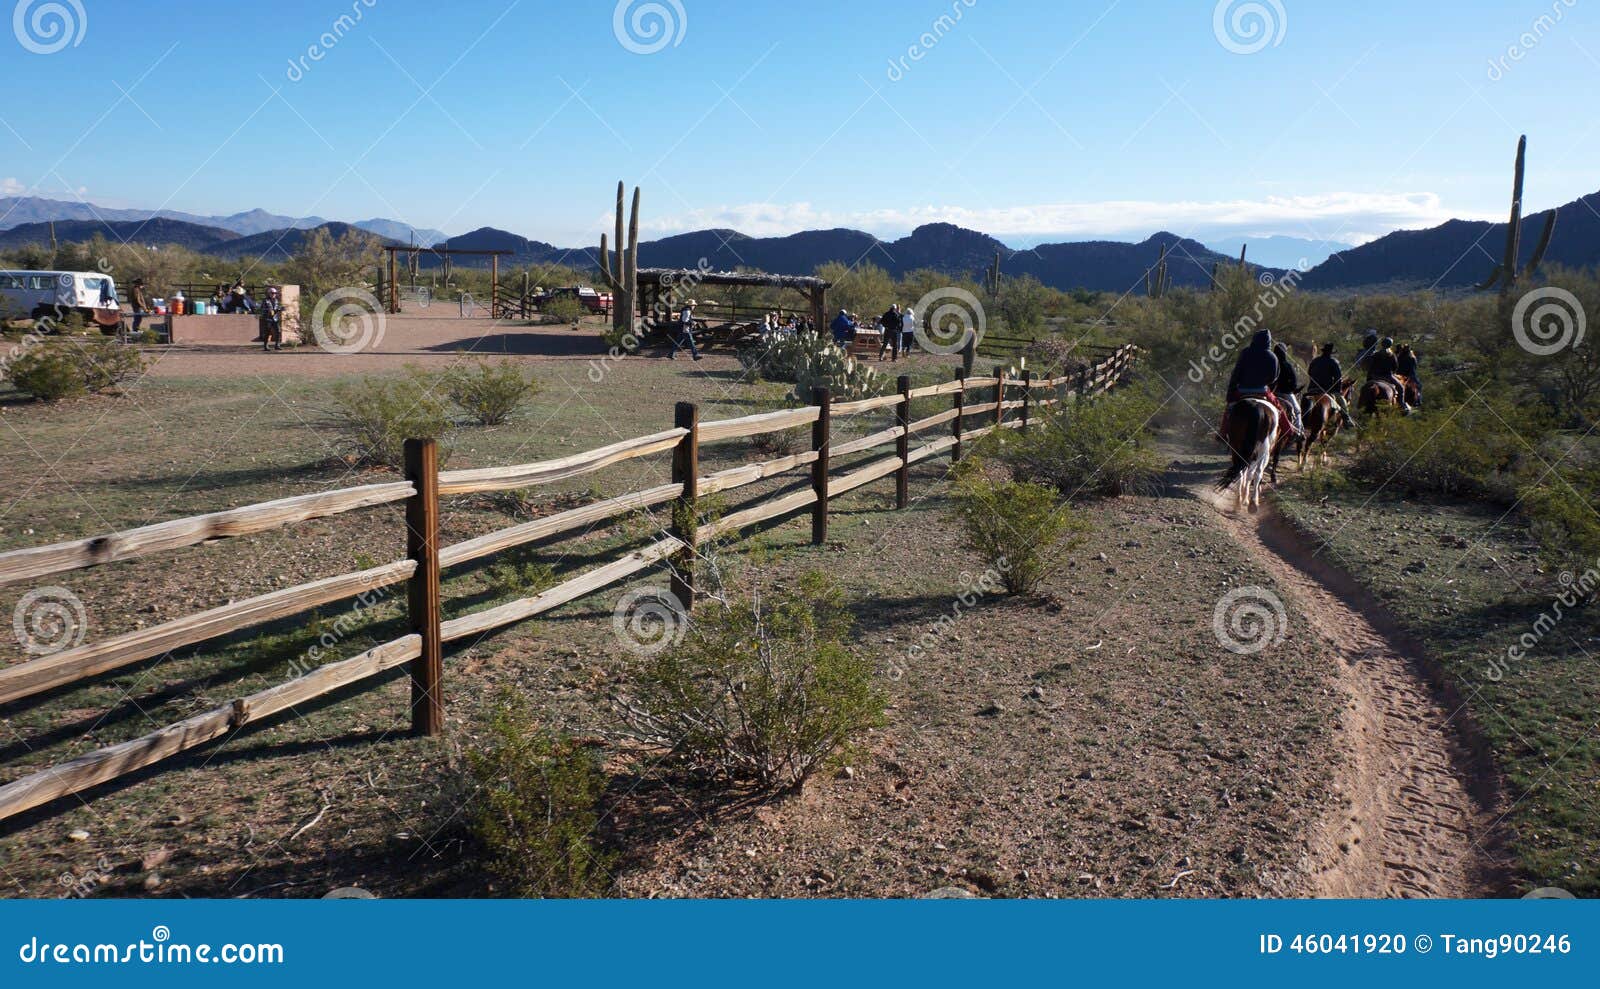 Arizona Horse Riding Adventures Editorial Image - Image of hourse, park